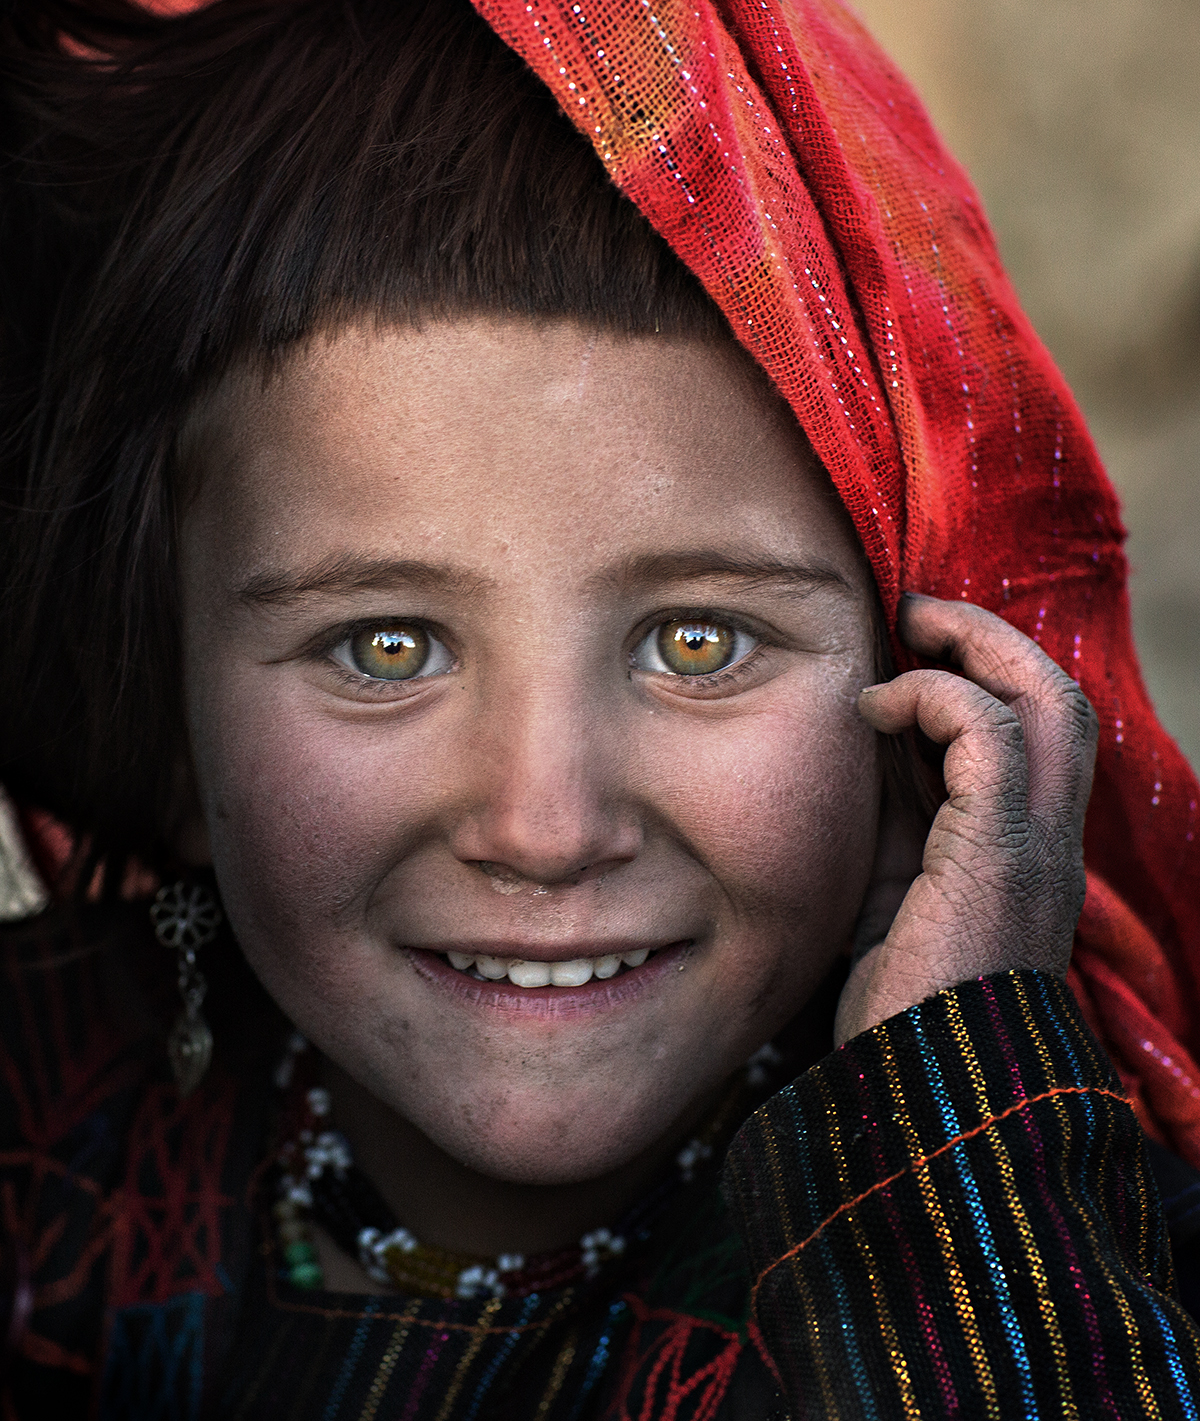 eyes that mesmerize. Afghanistan ...